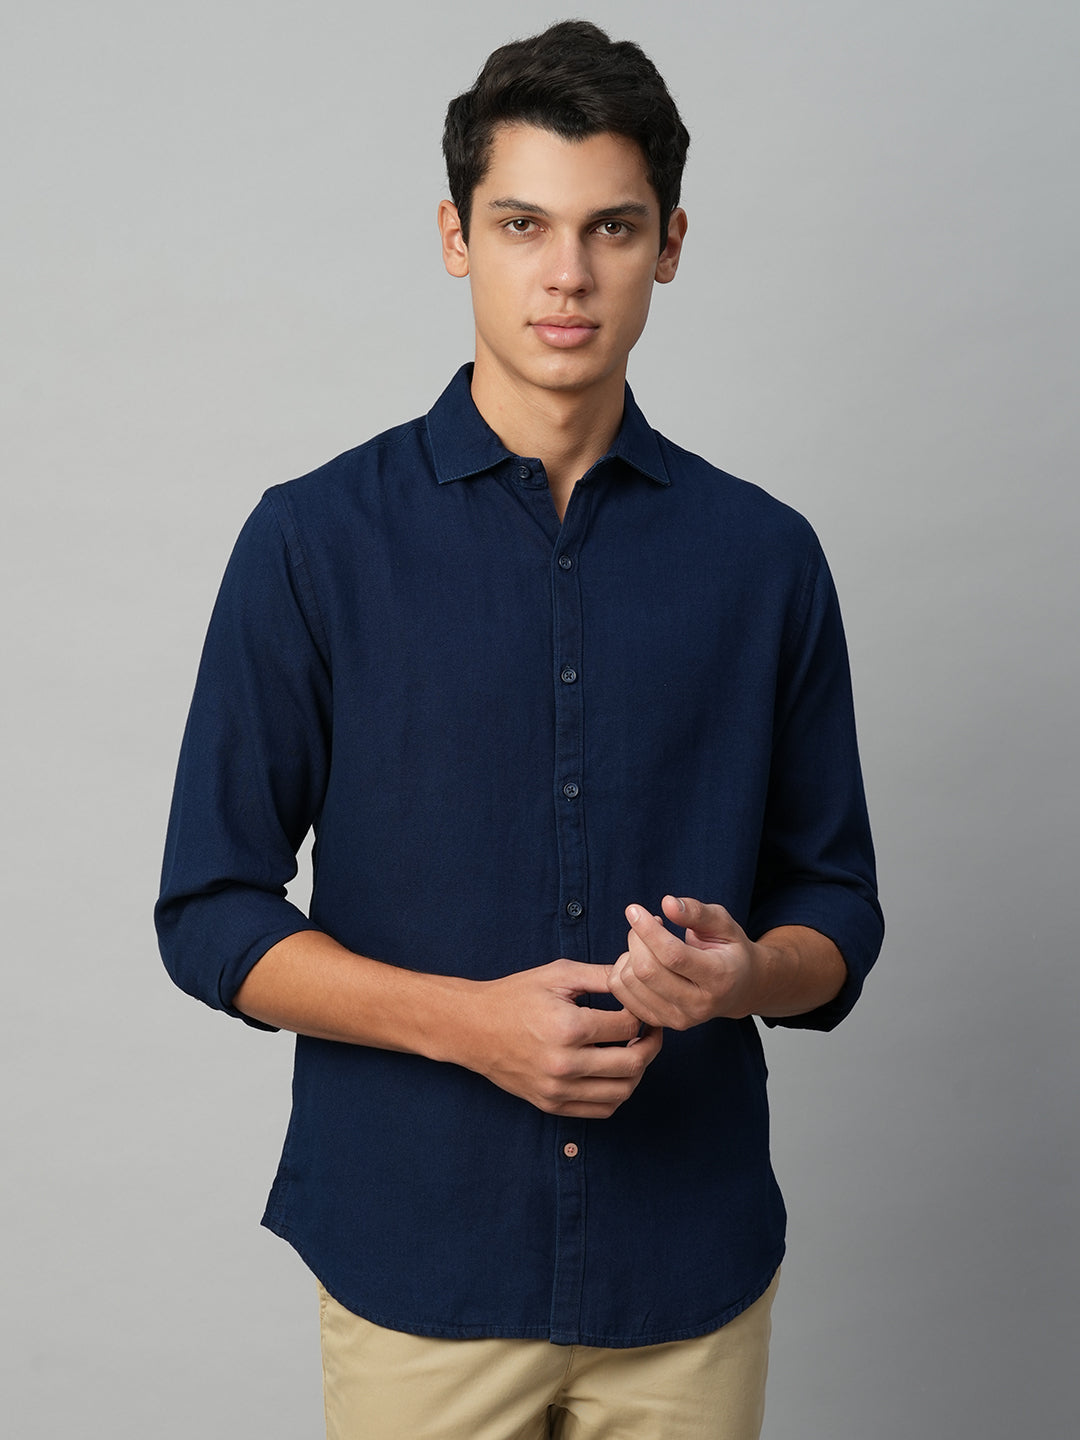 Buy Men's Cotton Casual Wear Slim Fit Shirts|Cottonworld